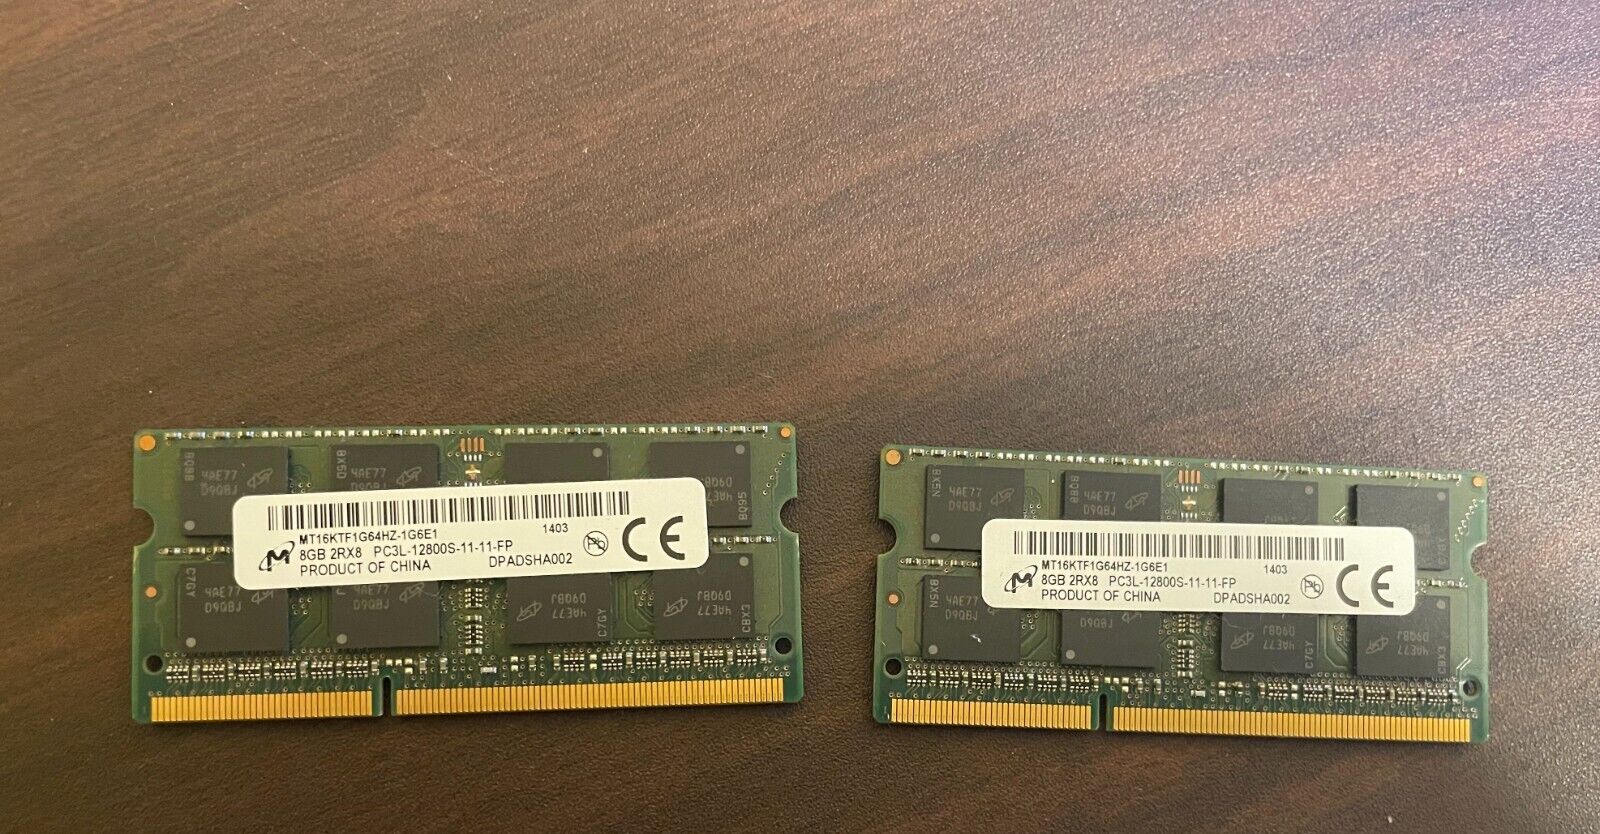 MICRON 8gb RAM -  2rx8 pc3l-12800s-11-11-FP  - 2 MODULES of 8GB each total 16GB